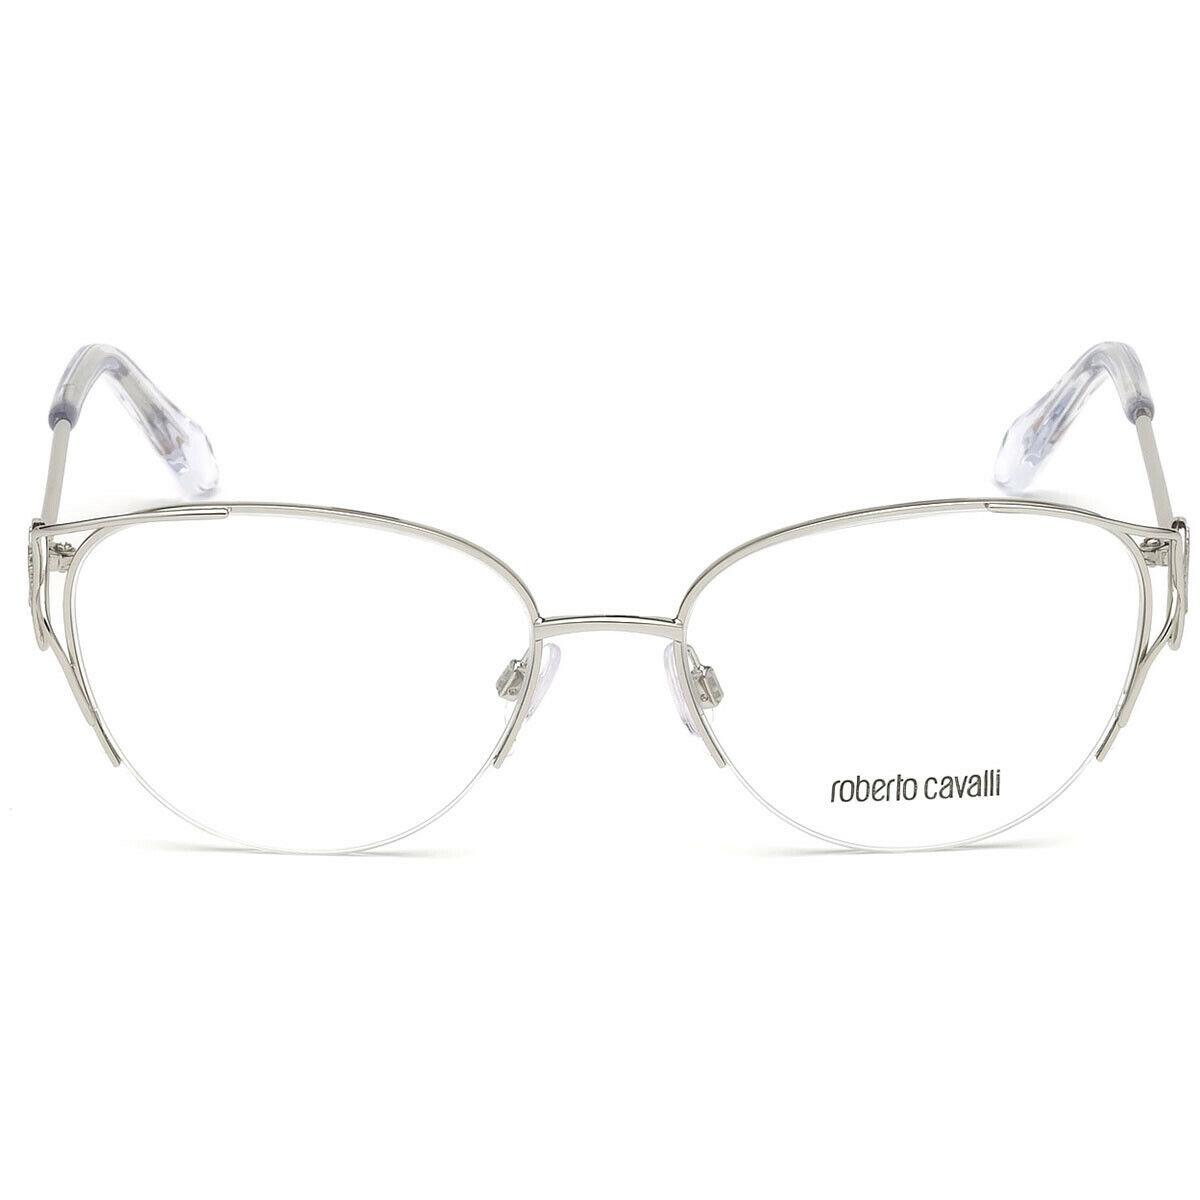 Roberto Cavalli Foiano 5052 Silver 016 Metal Eyeglasses Frame 54-17-130 Italy RX